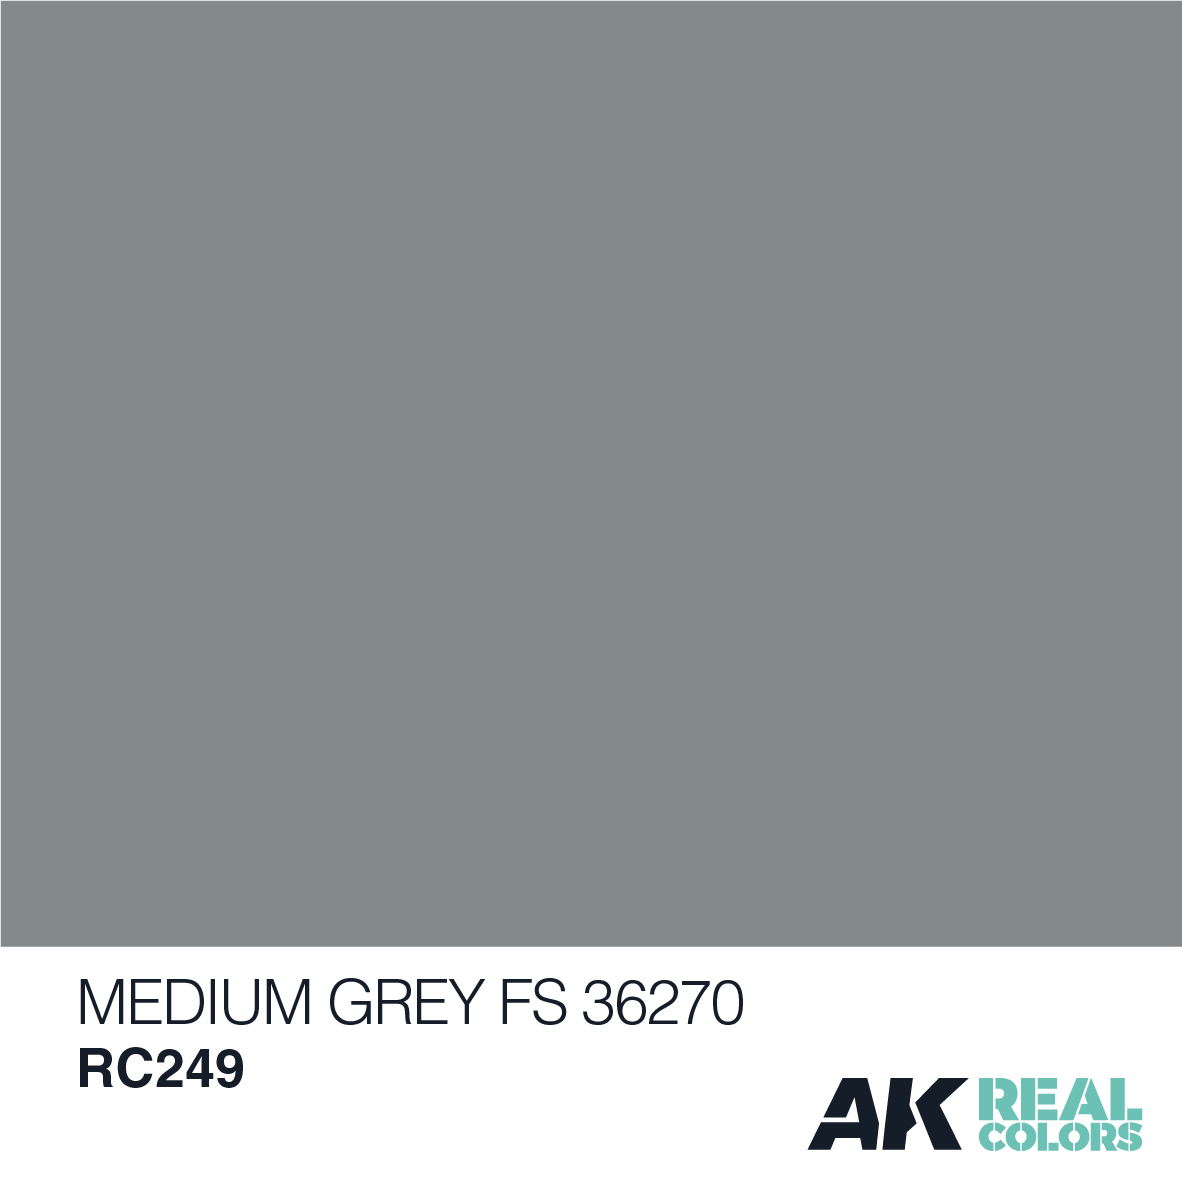 Medium Grey FS 36270